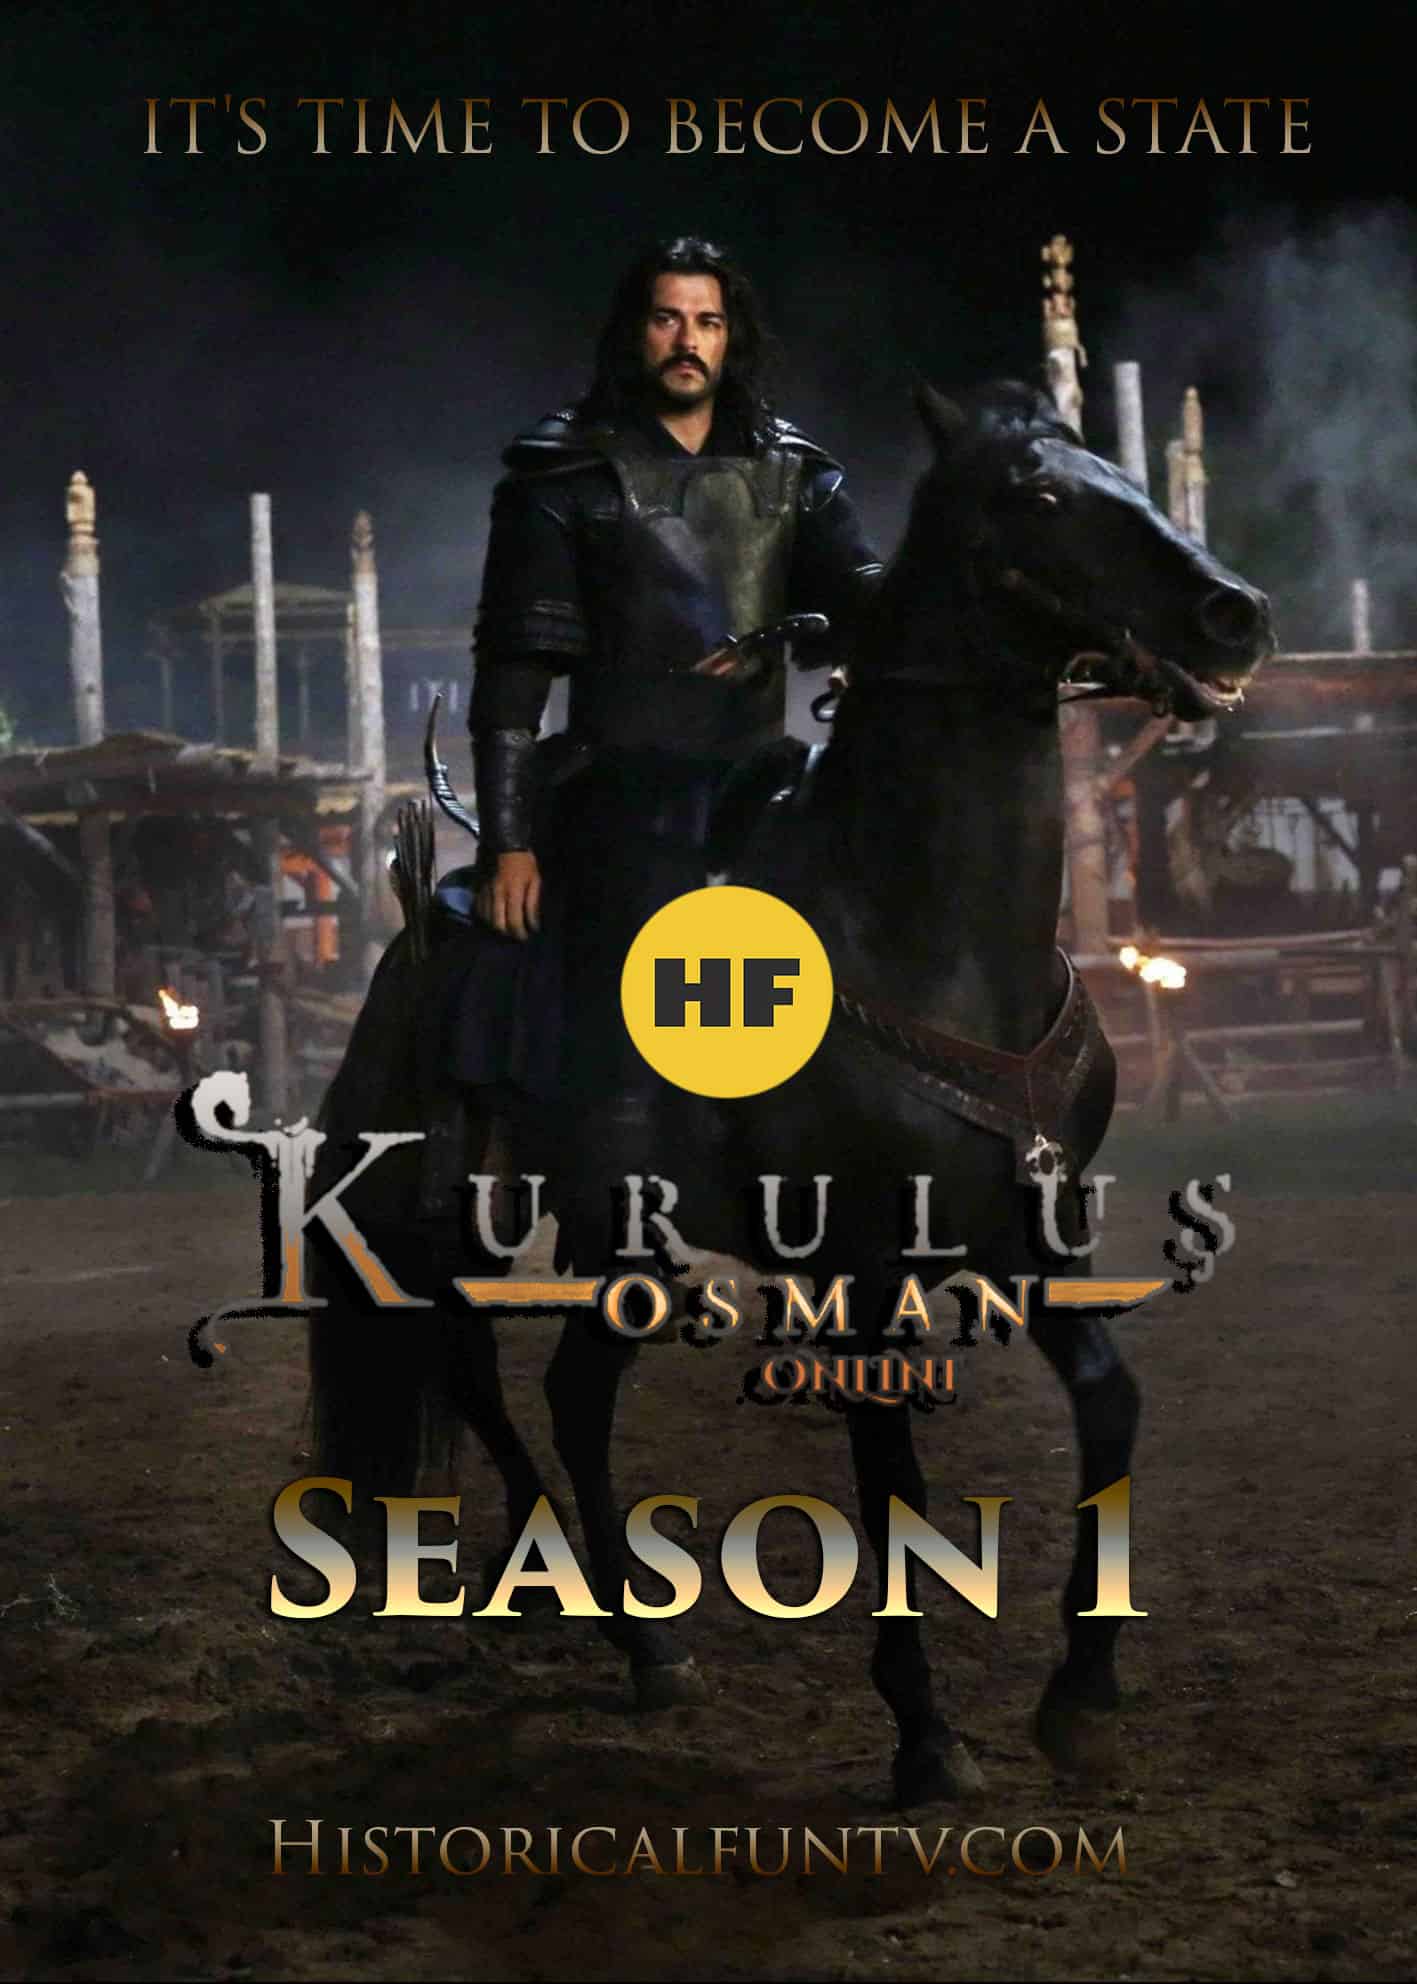 Kuruluş: Osman Season 2 Release Date, Cast, Plot & Other Updates